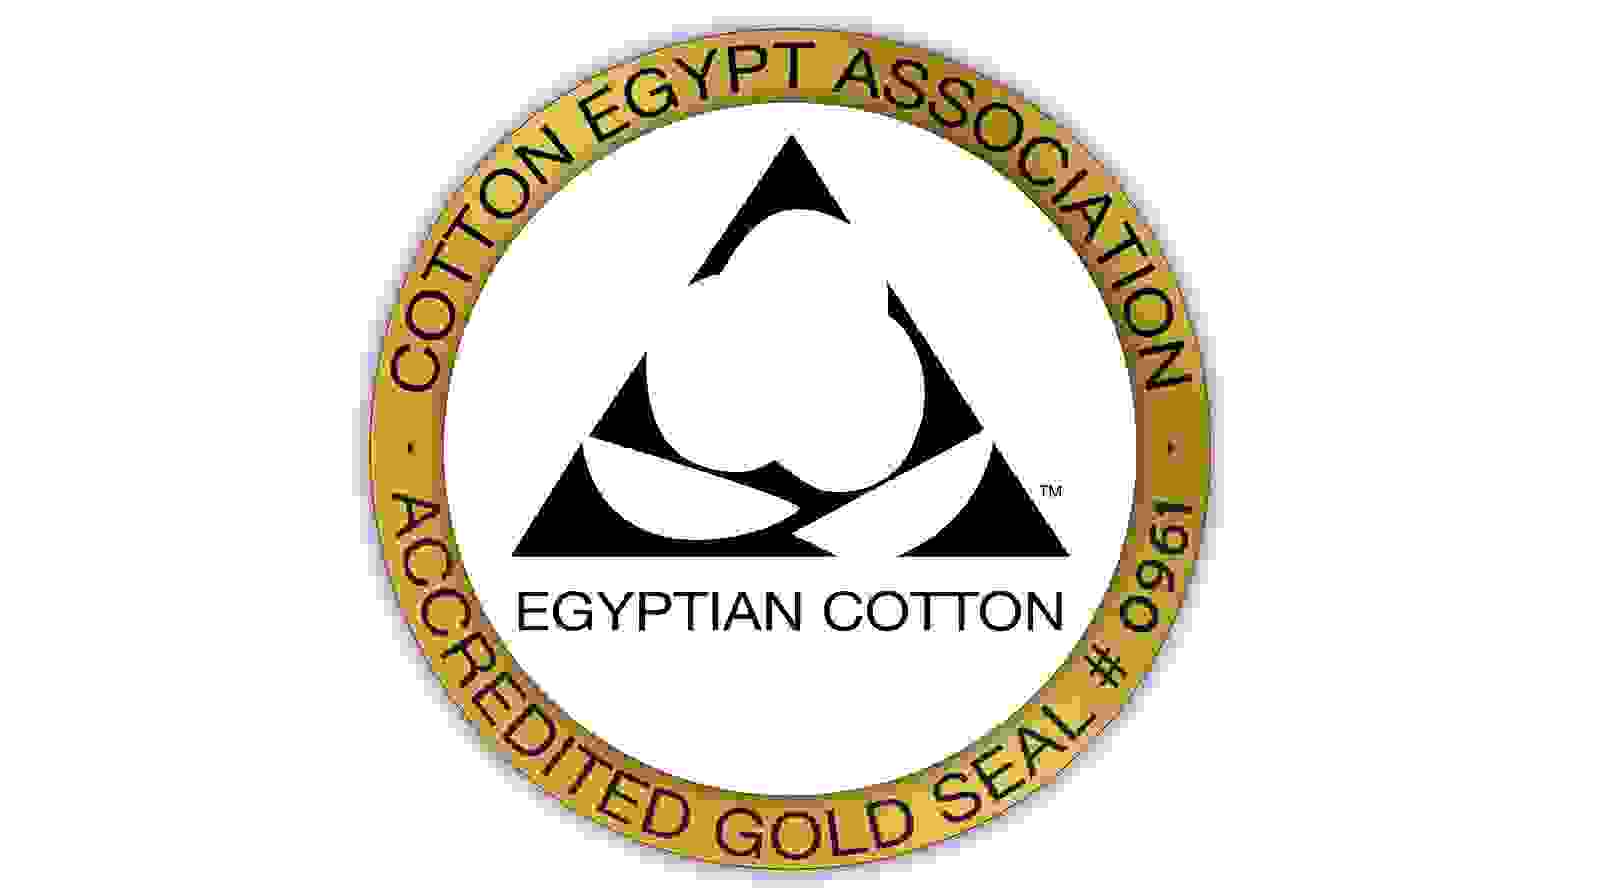 Cotton Egypt Association Logo